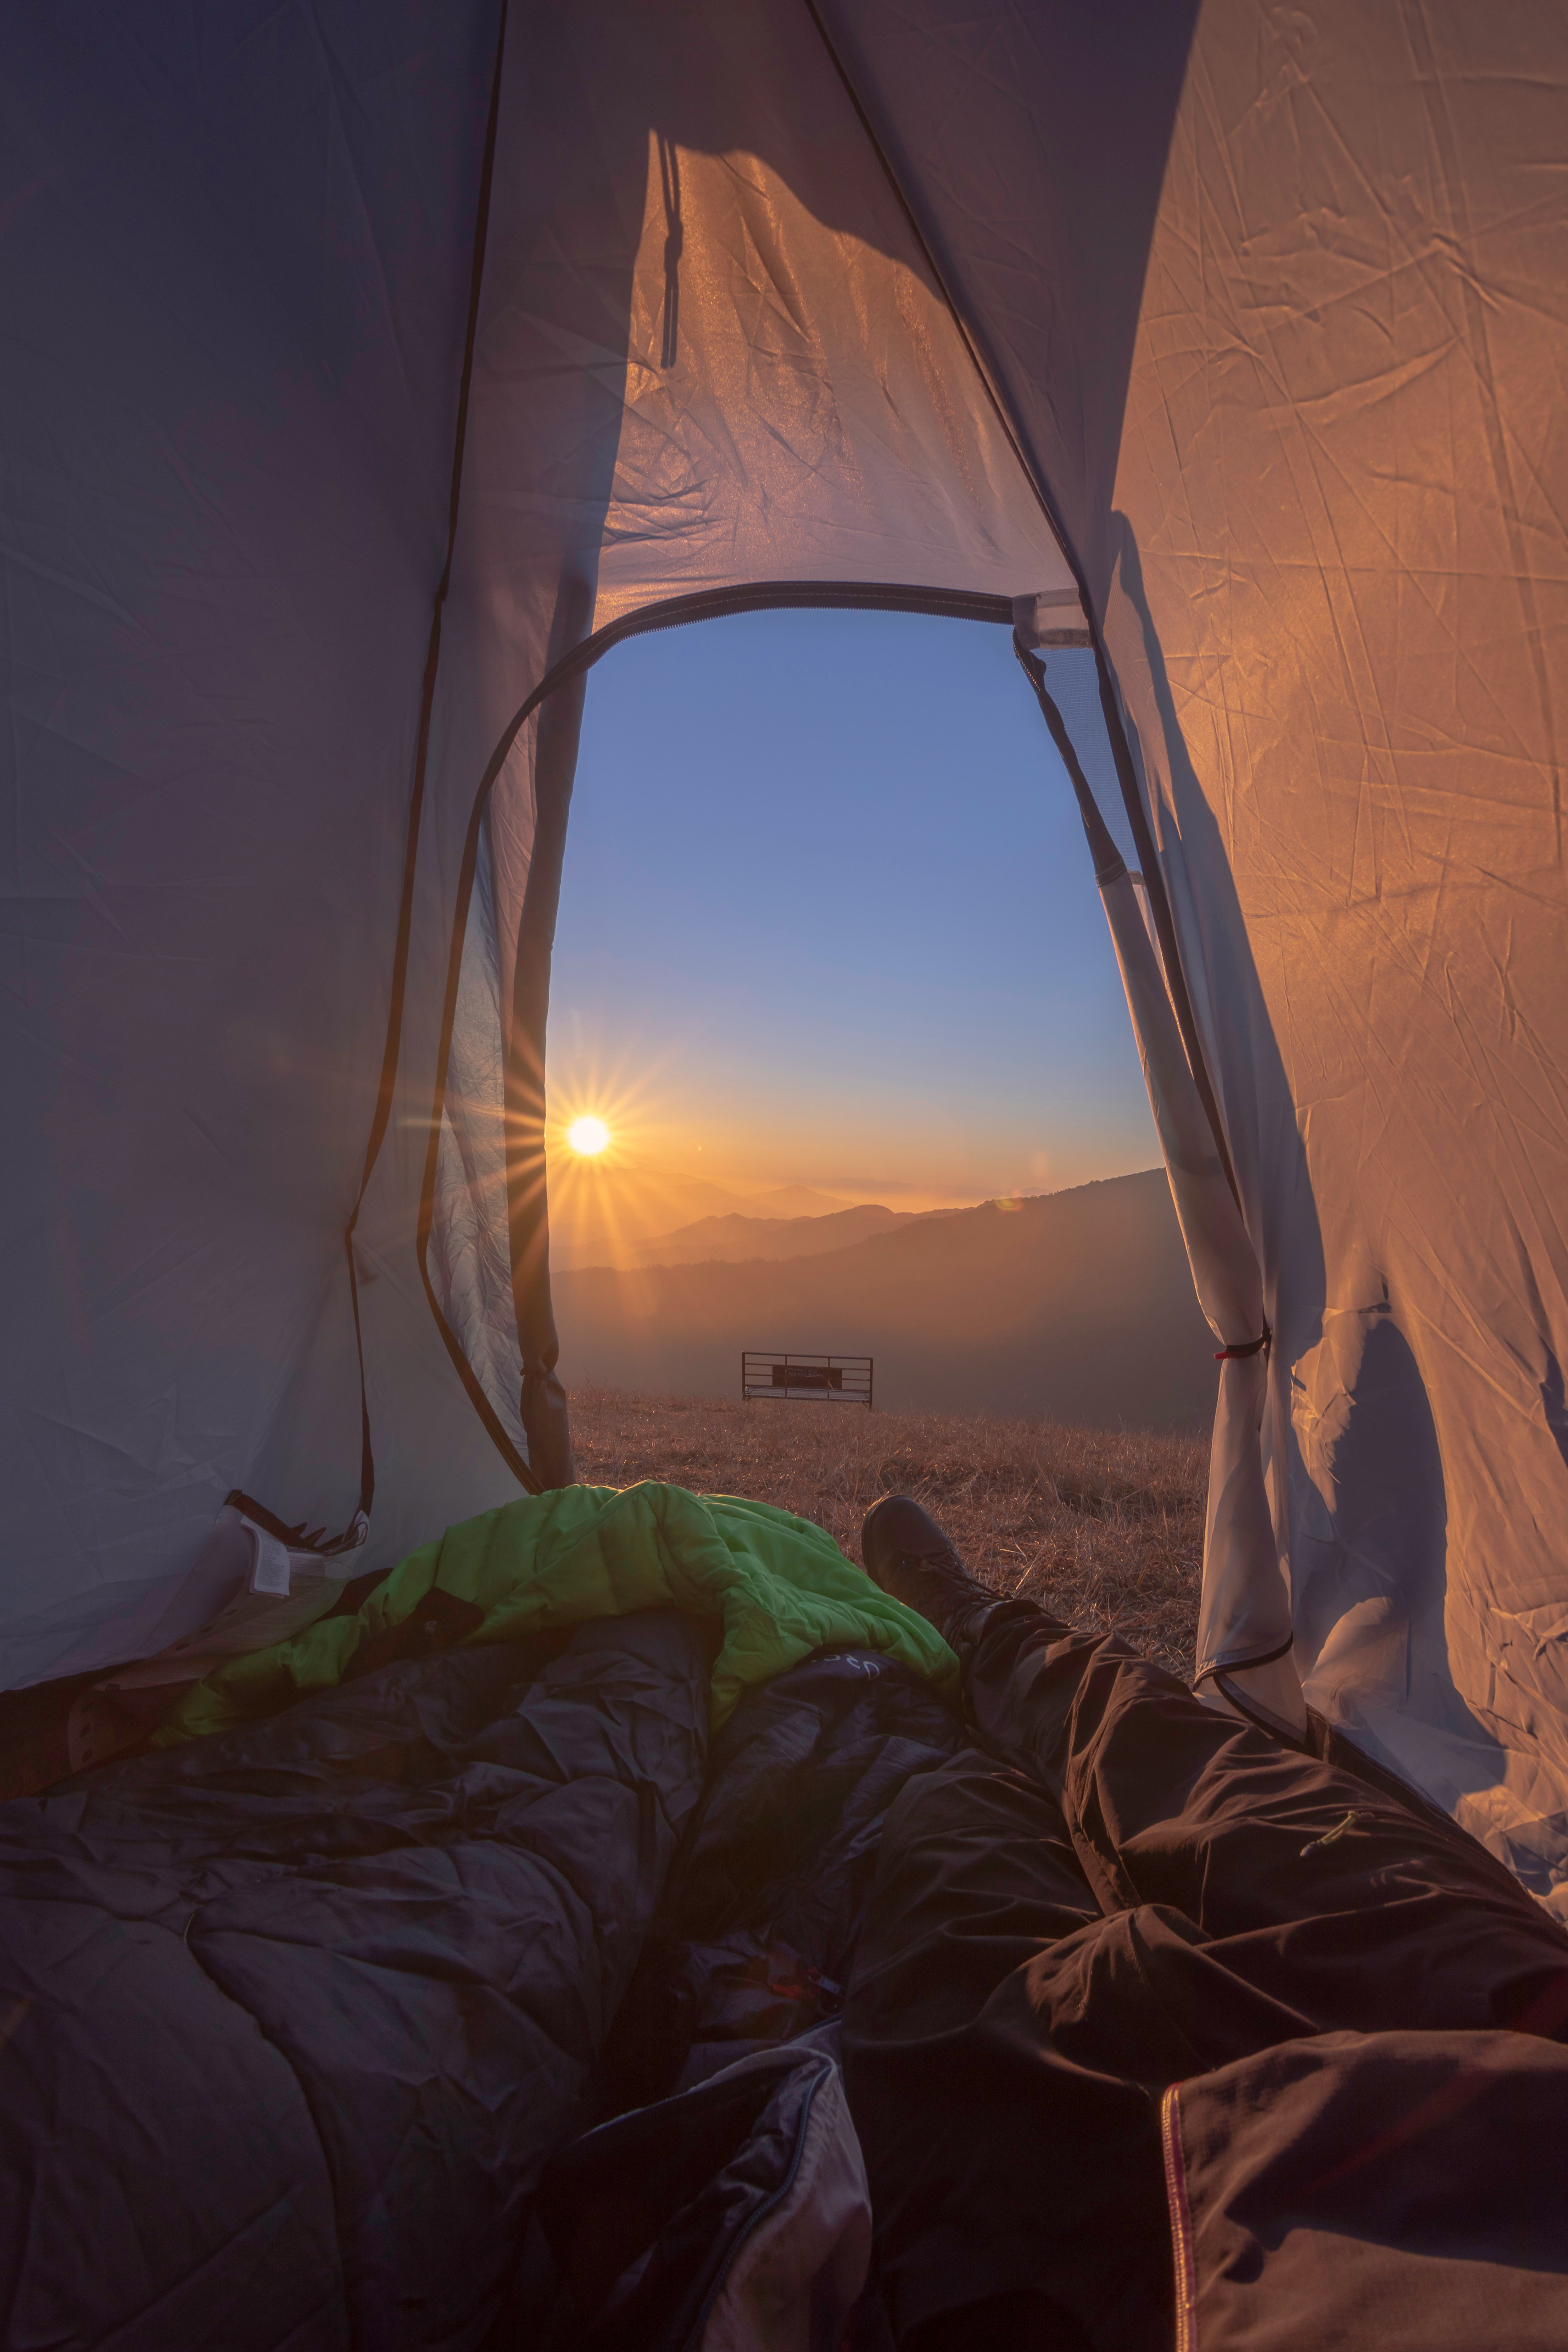 campsite, nature, legs, journey, sunlight, tent, camping, tourism